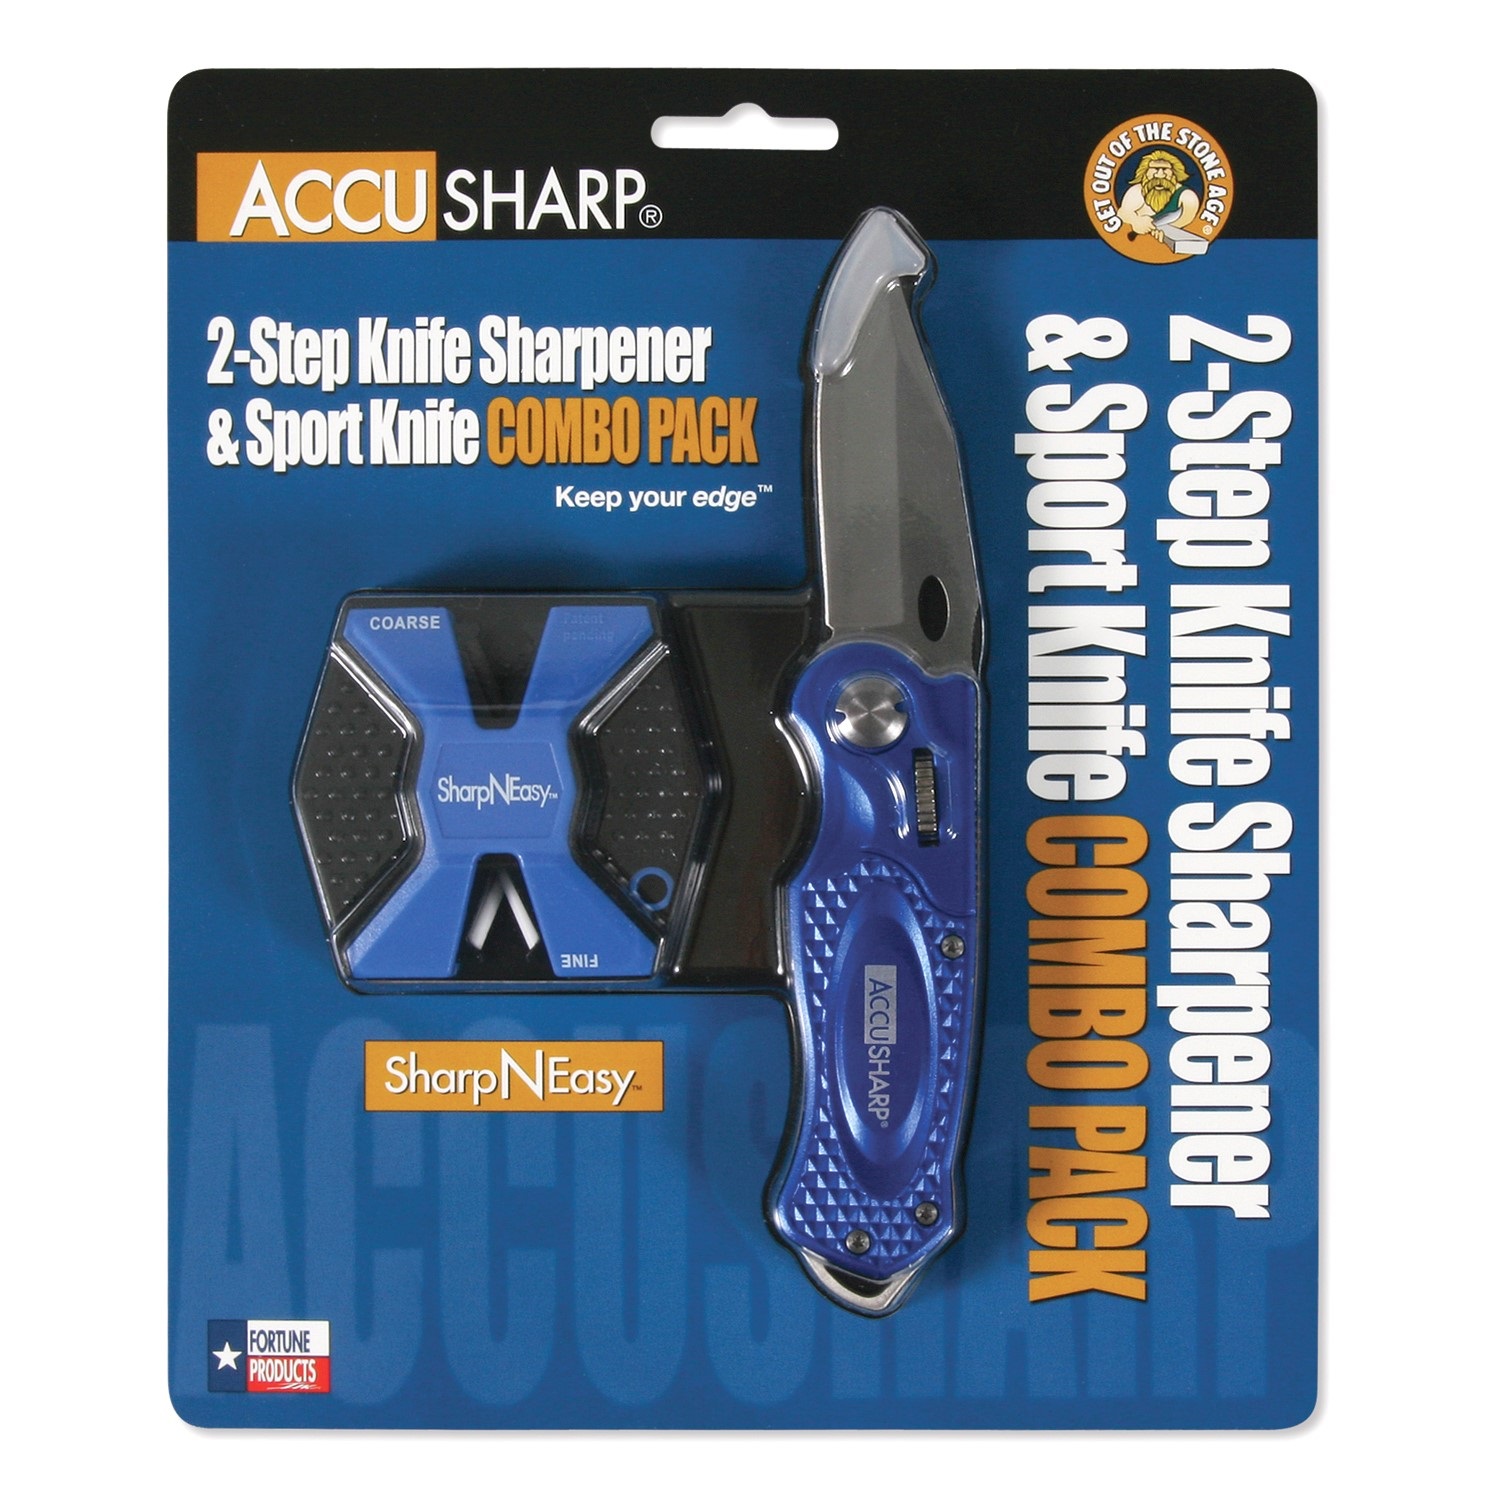 https://op1.0ps.us/original/opplanet-accusharp-sharp-n-easy-2-step-sharpener-and-sport-knife-4004696-main